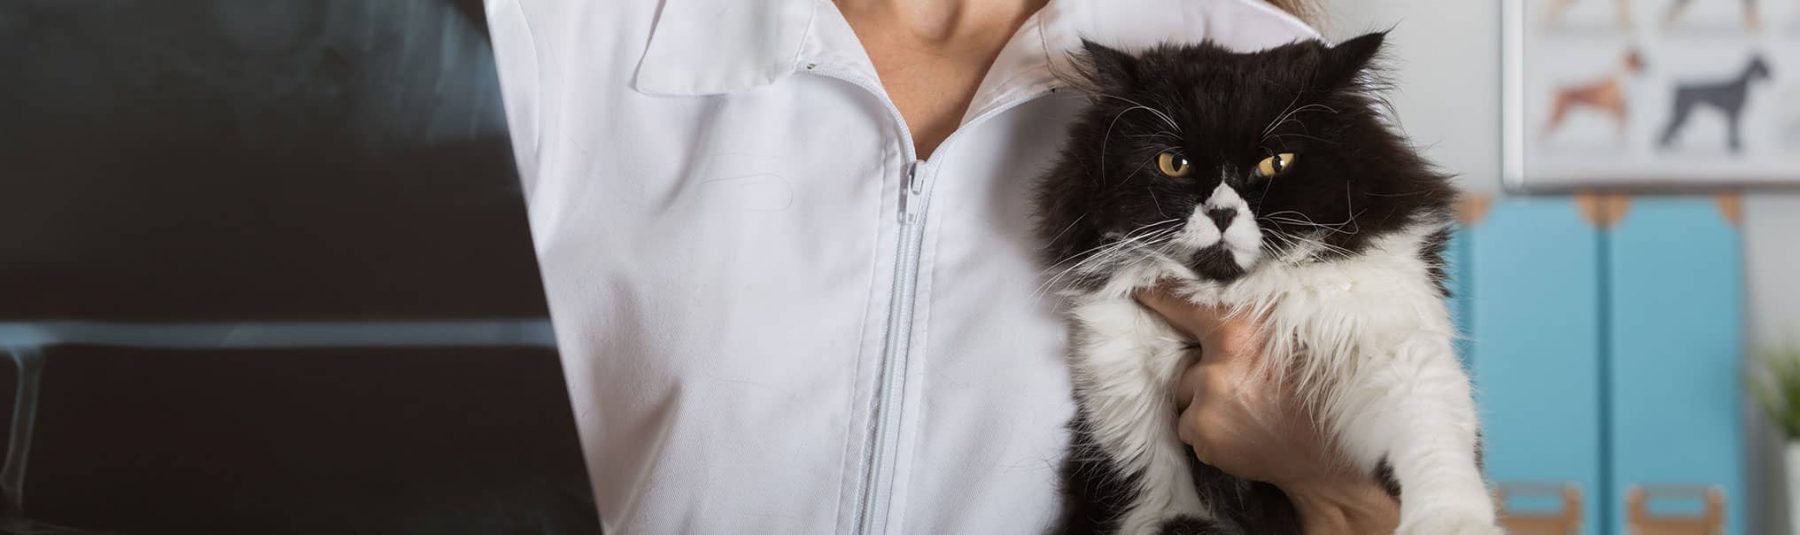 Cat Ultrasounds & XRay Services Pet Diagnostics Campbell River